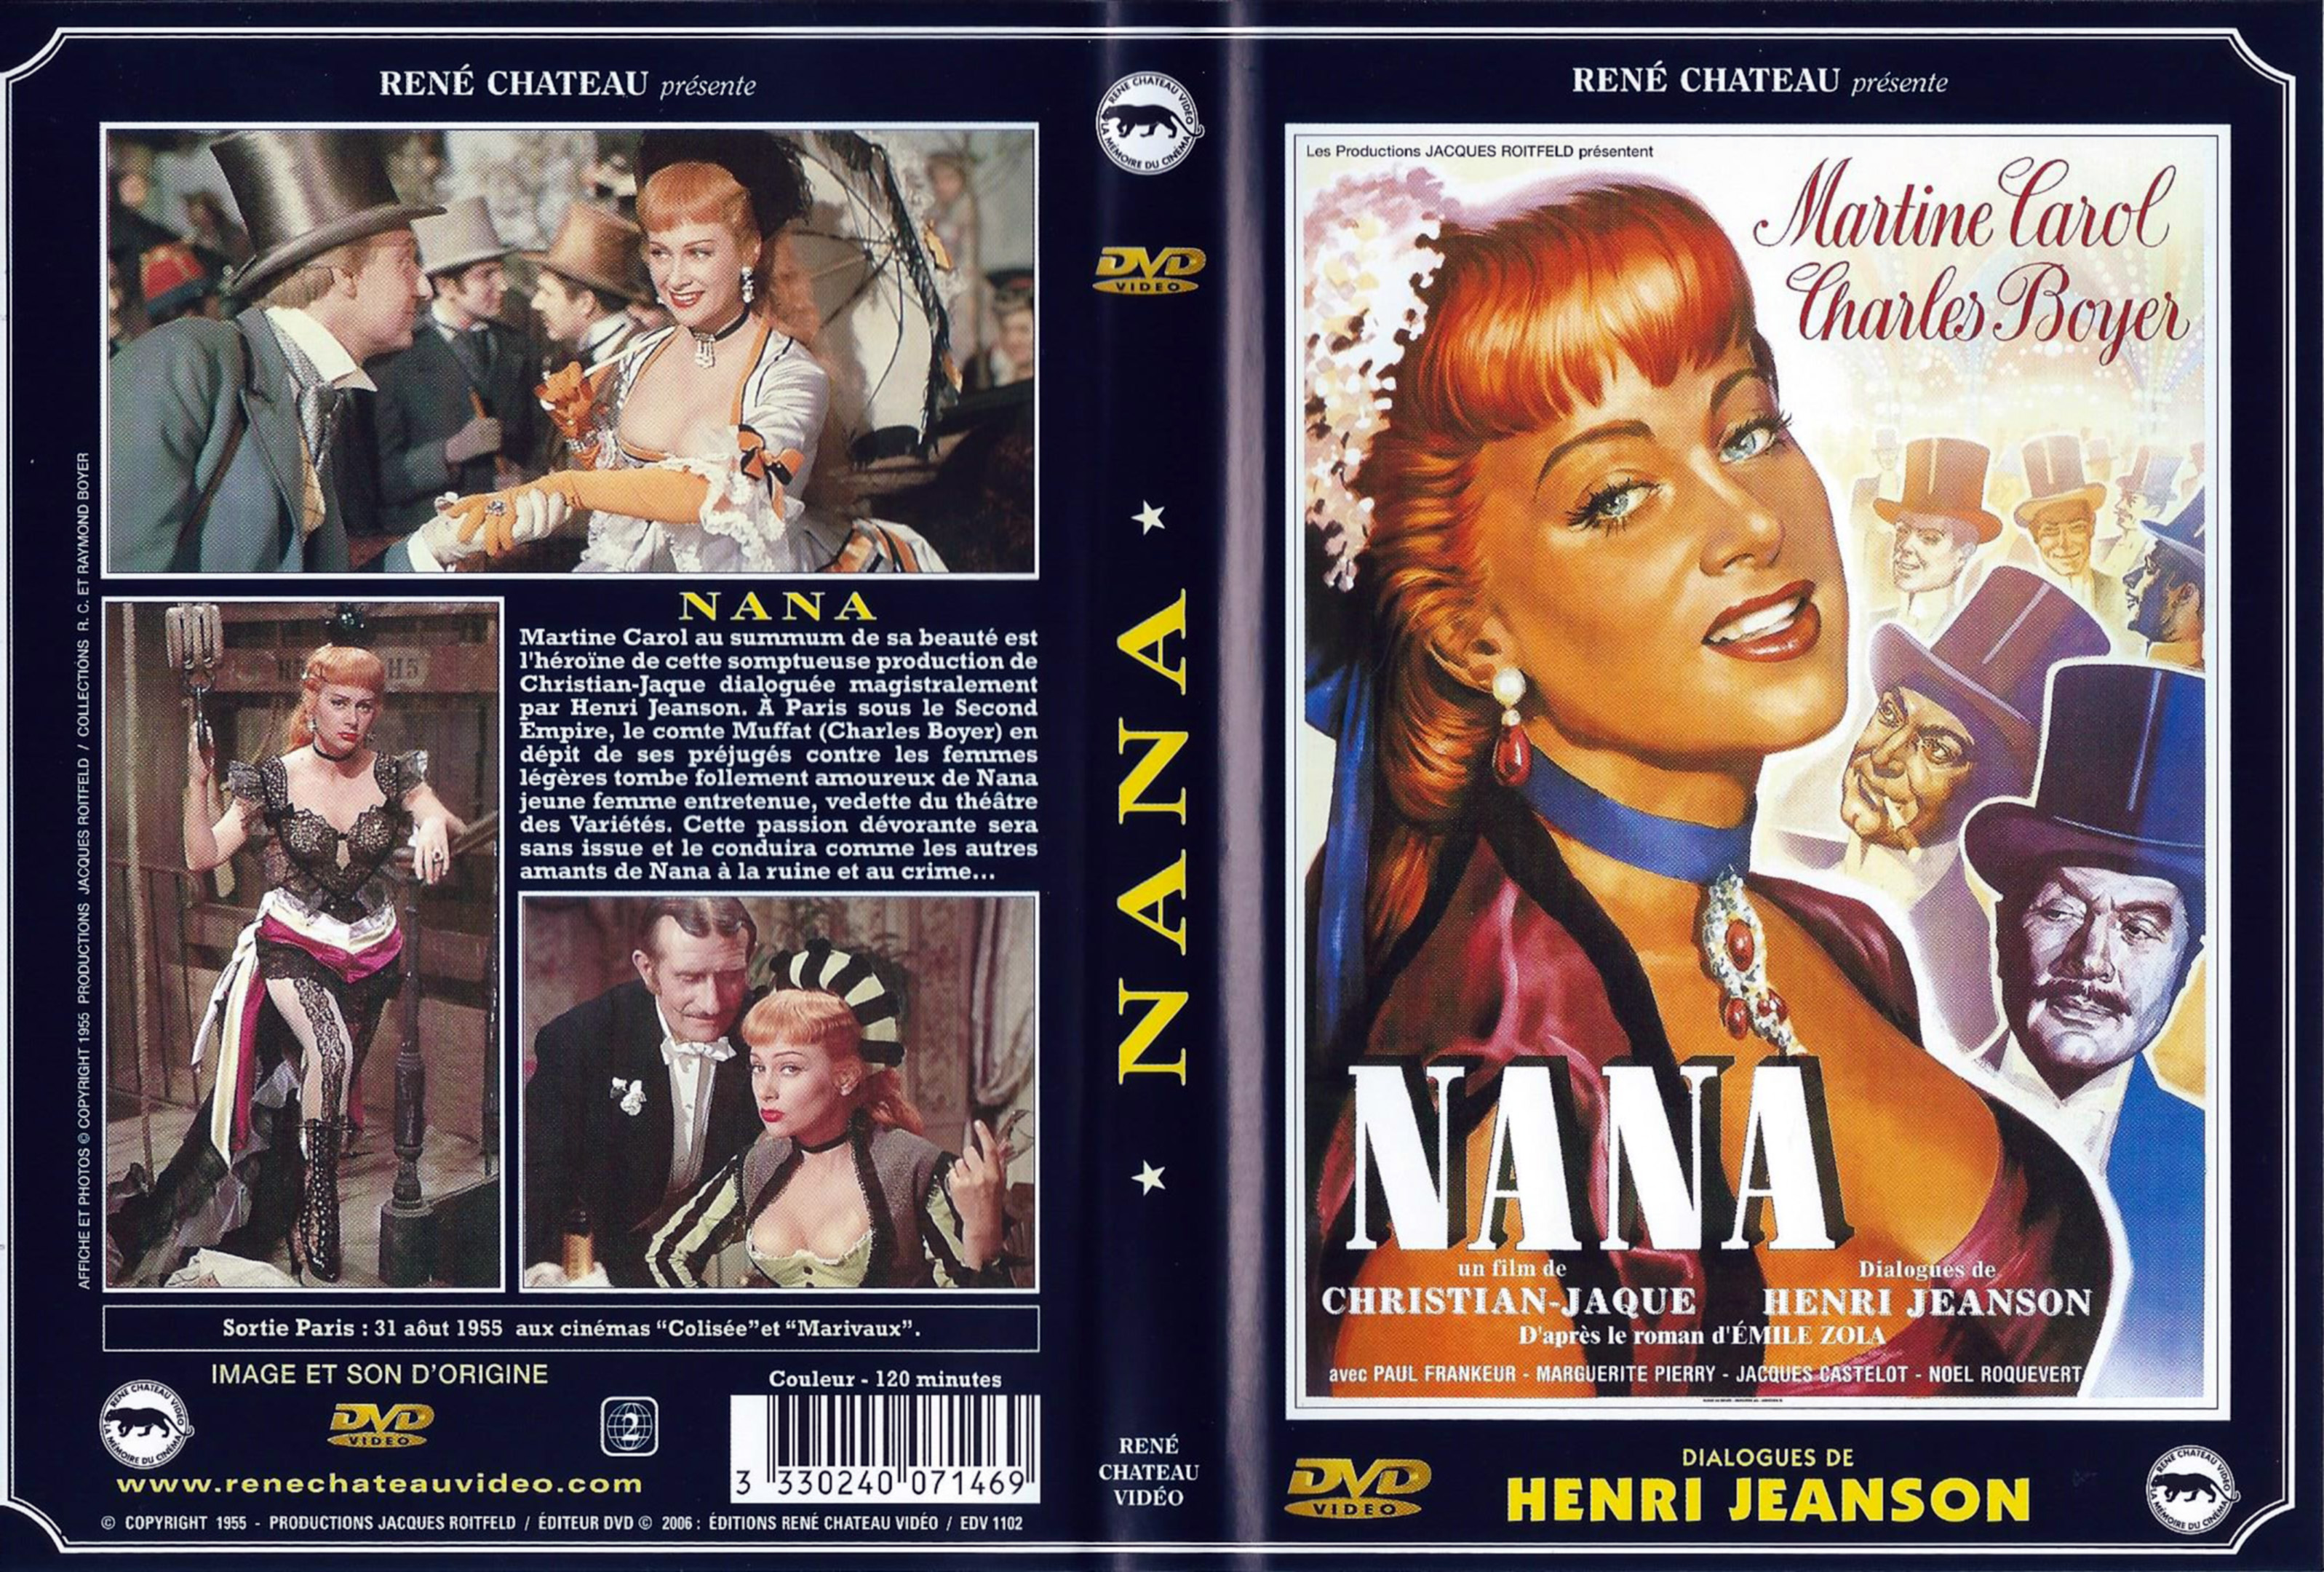 Jaquette DVD Nana